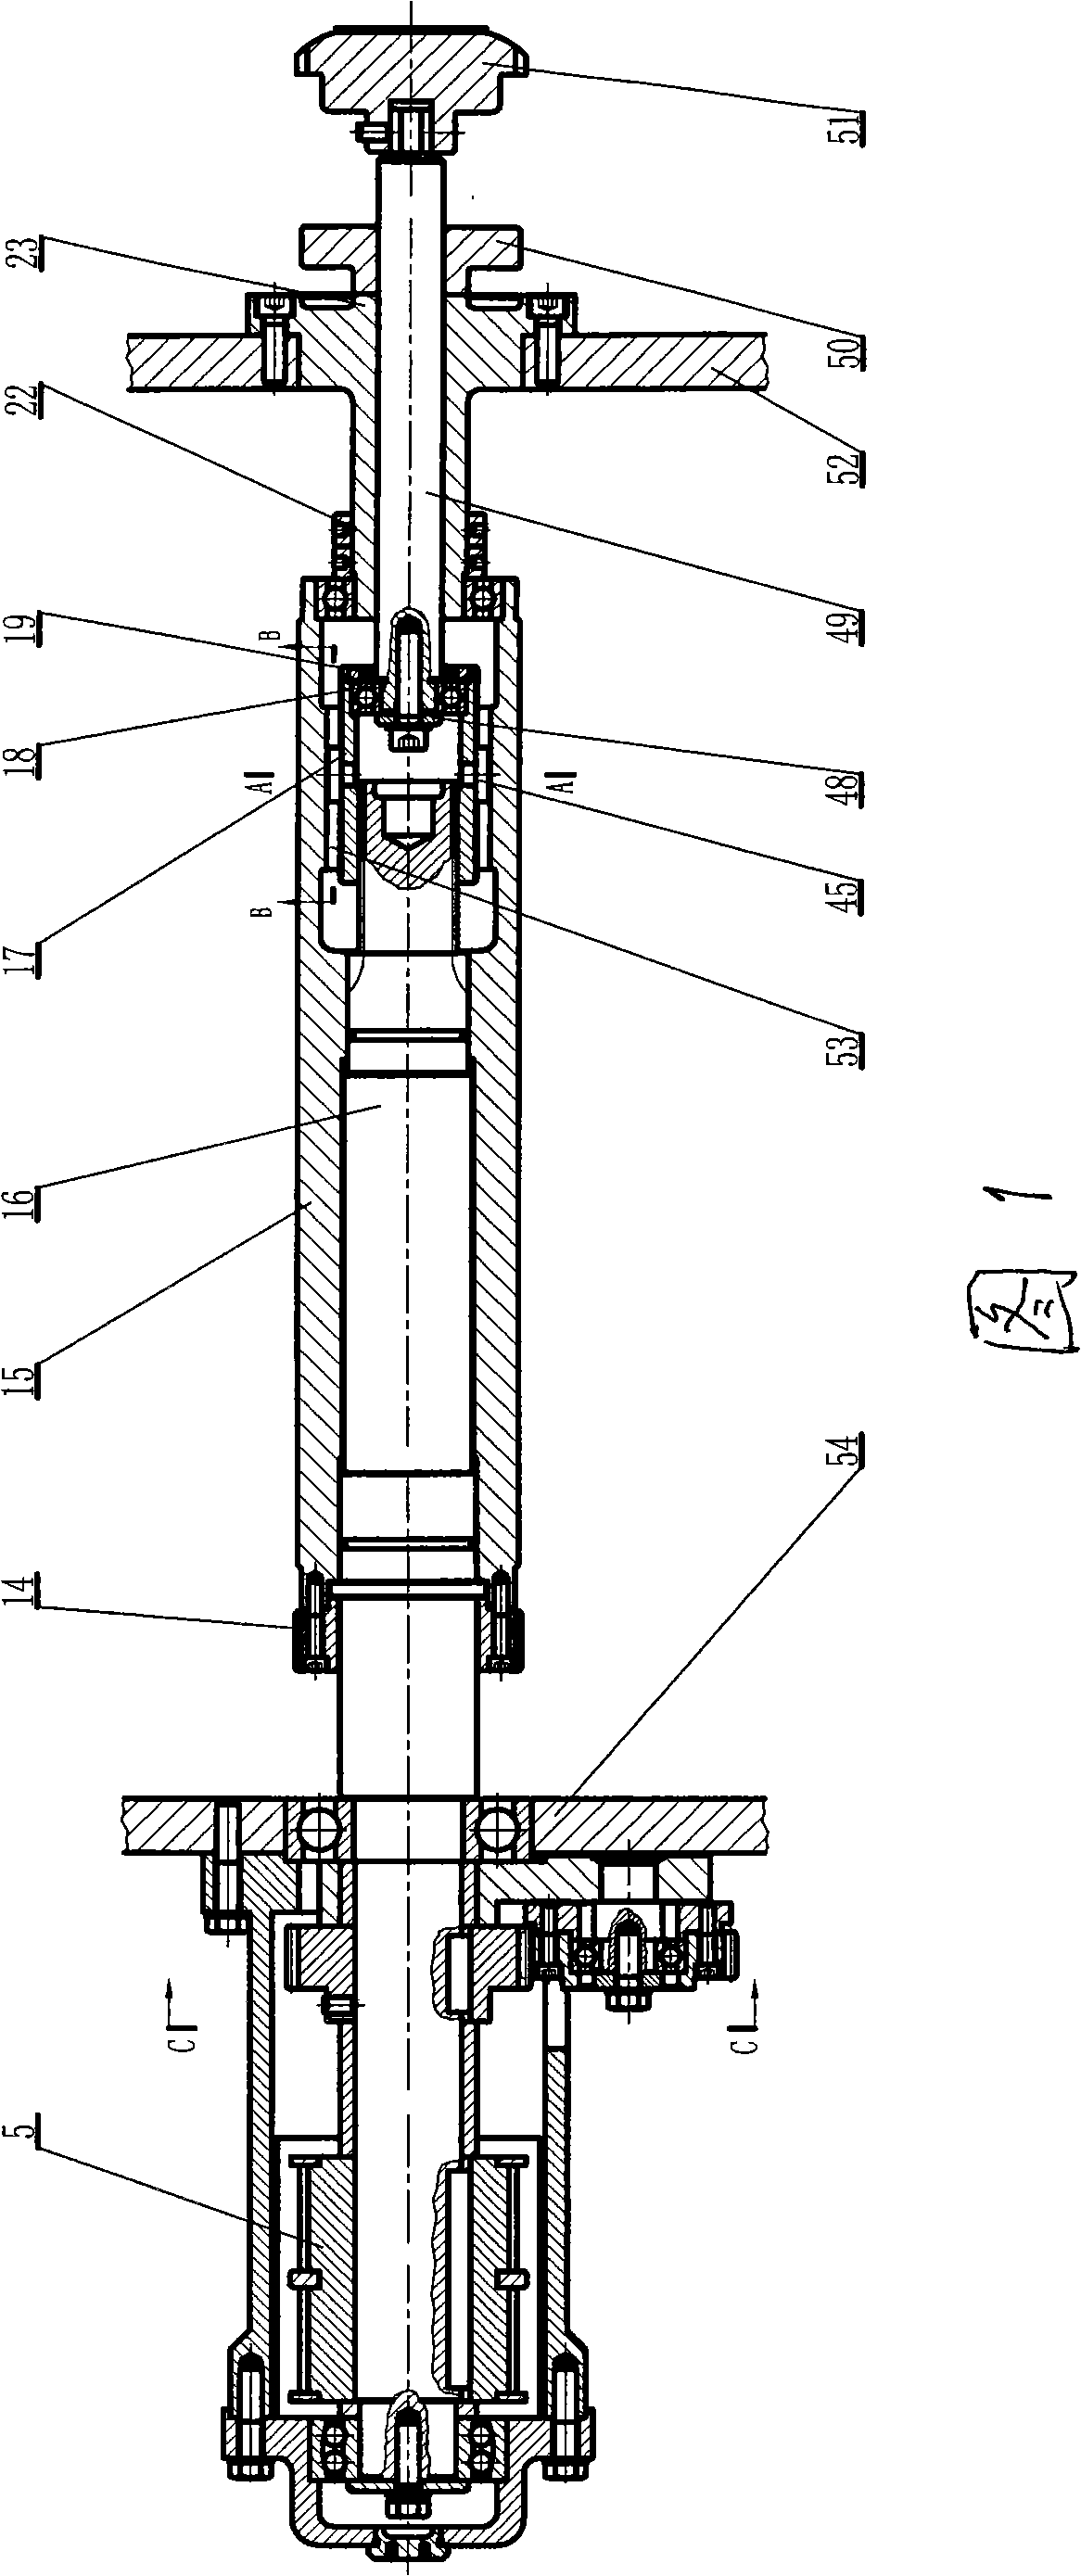 Printer roller platen rotation angle adjusting method and apparatus